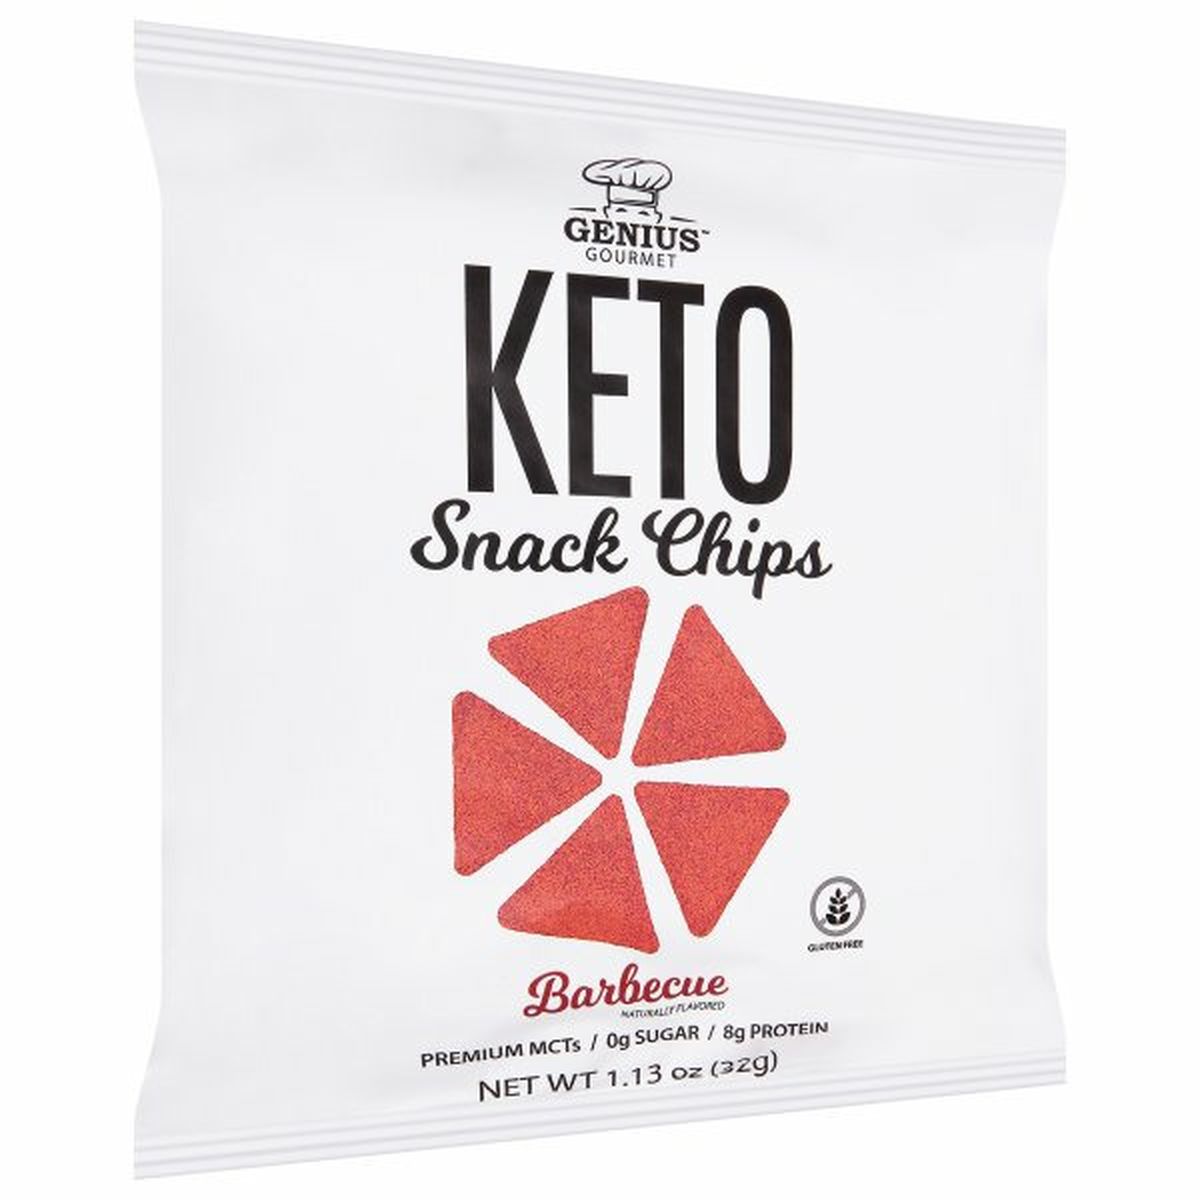 Calories in Genius Gourmet Snack Chips, Keto, Barbecue